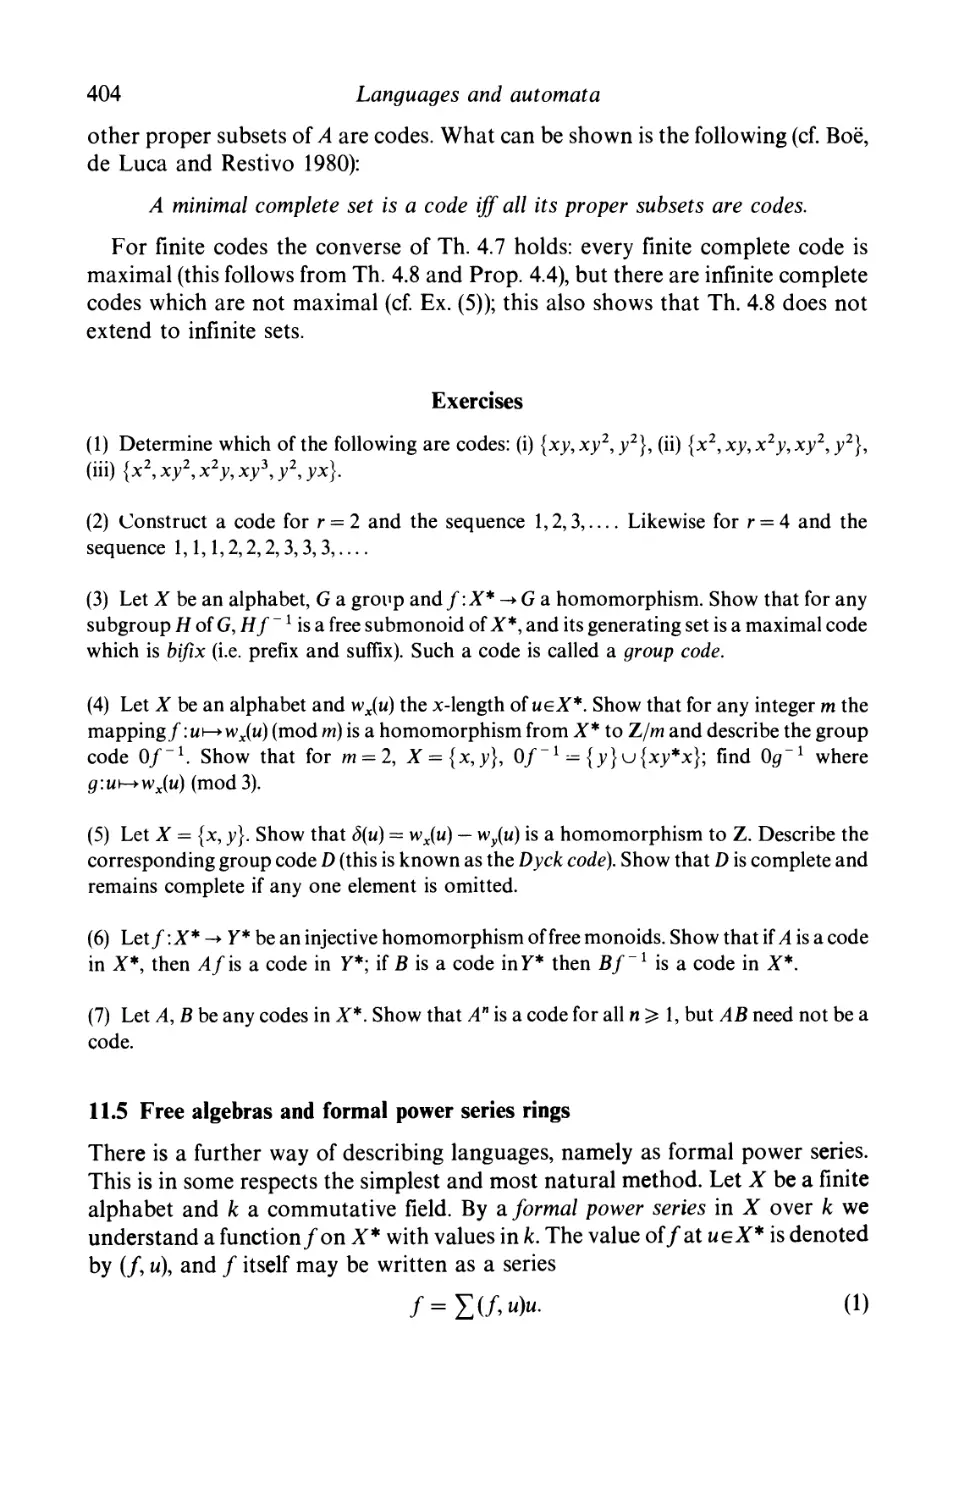 11.5 Free algebras and formal power series rings